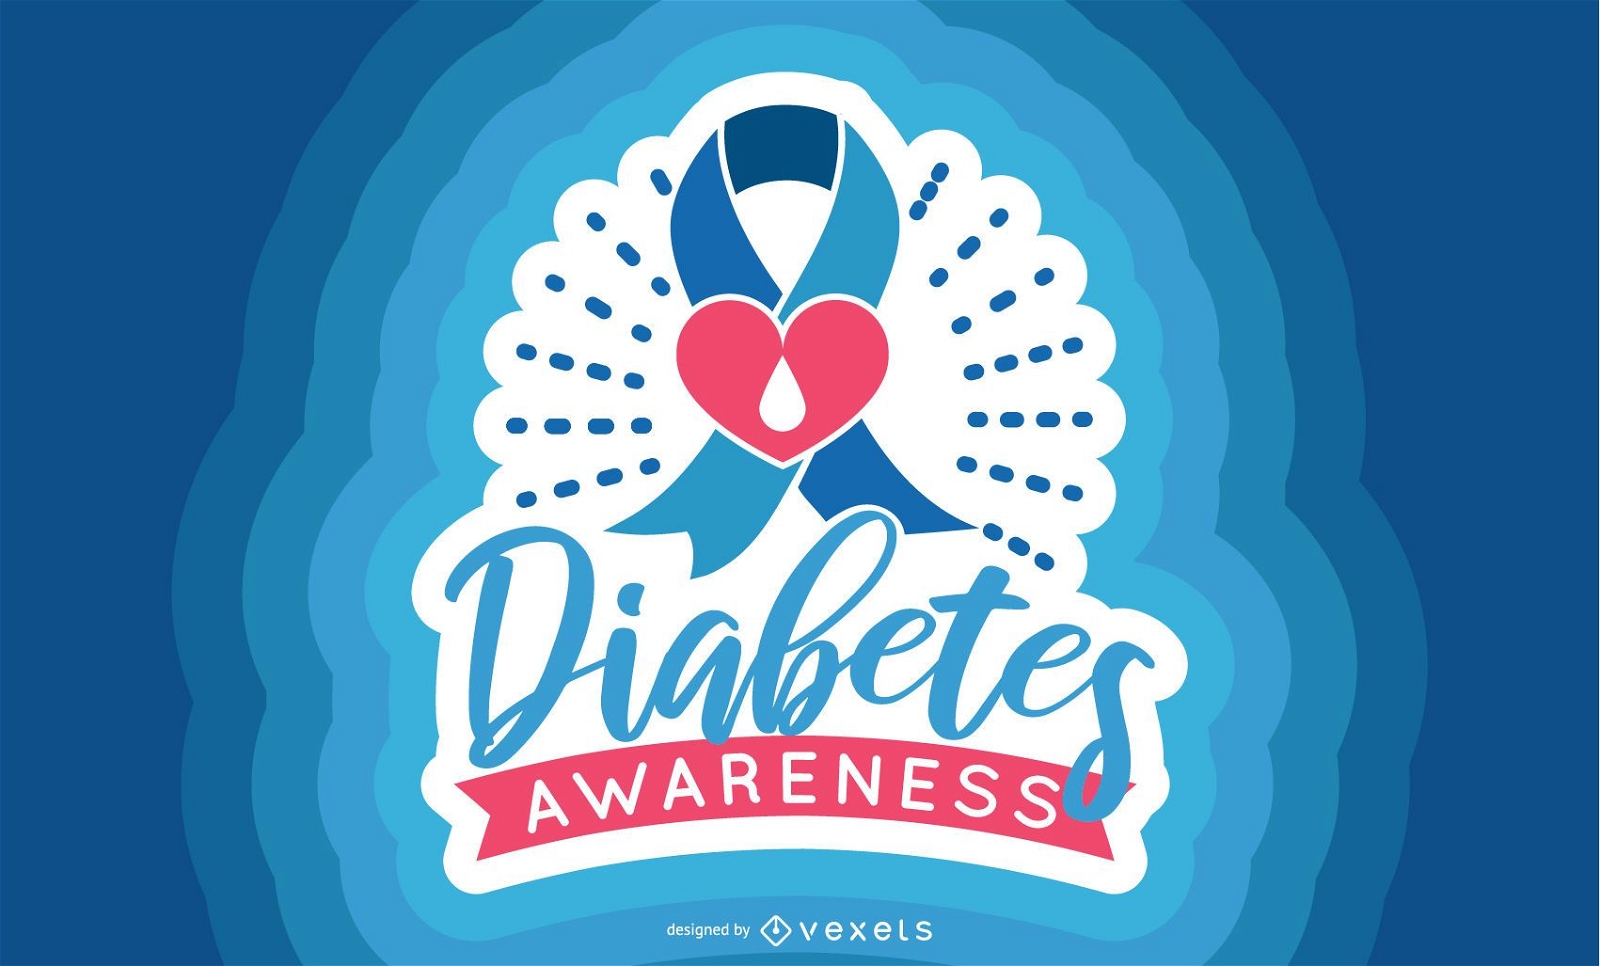 Diabetes-Bewusstsein Banner Design